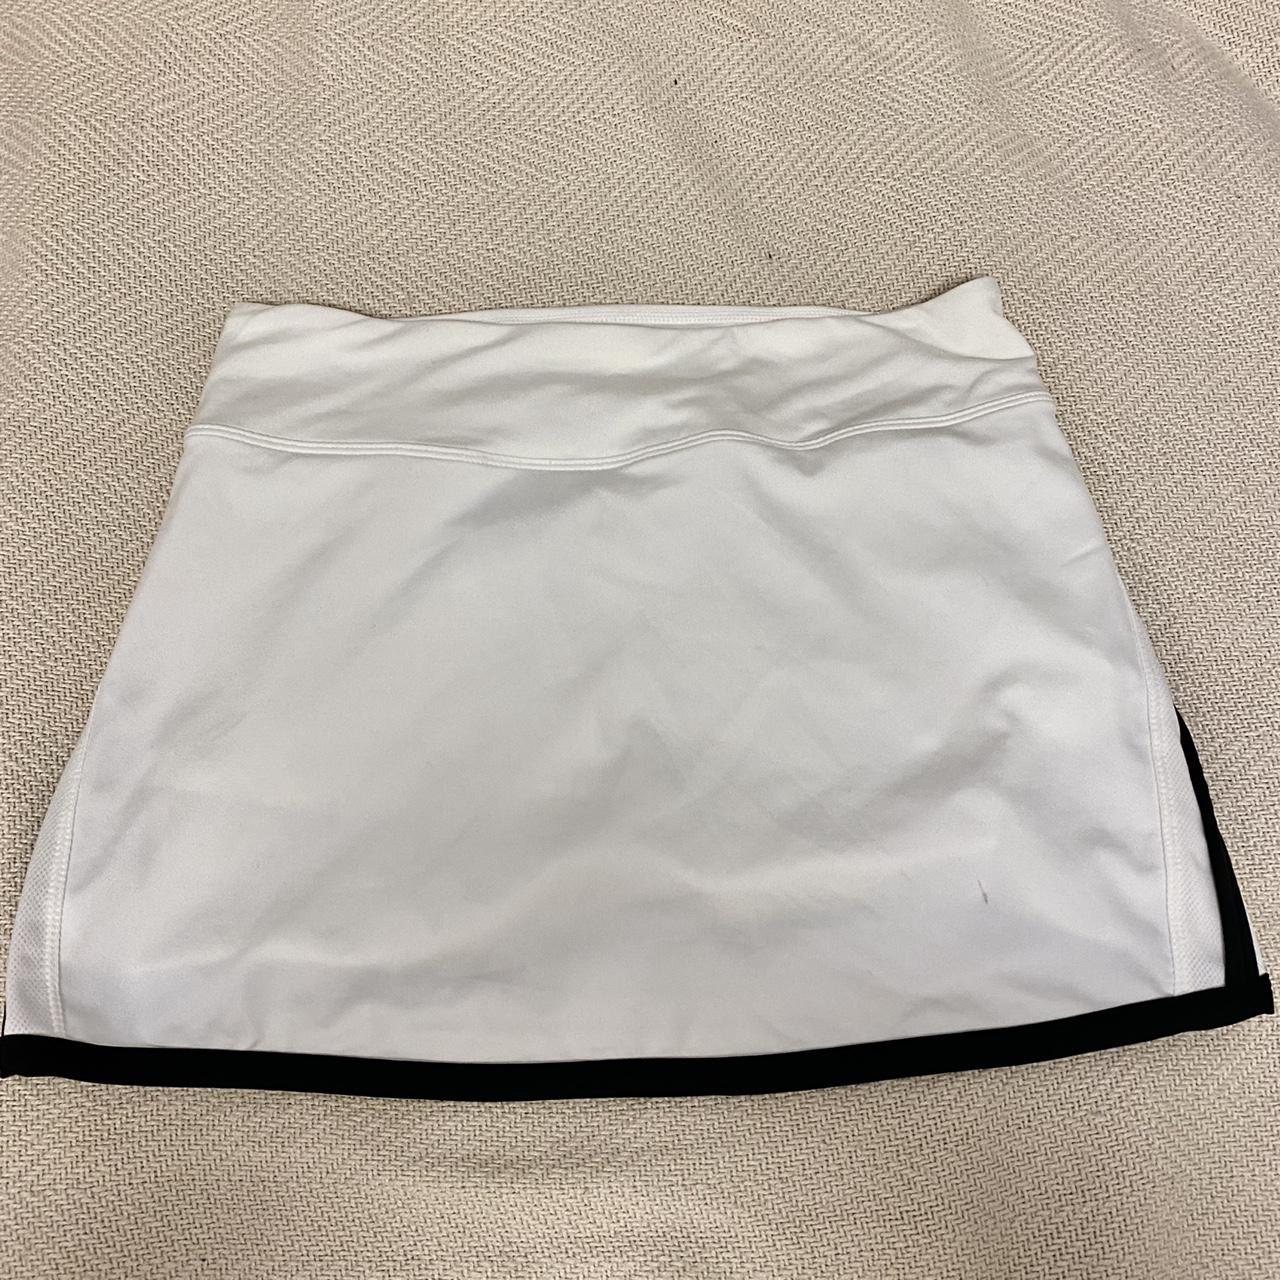 Product Image 2 - dri fit athletic tennis skirt
spandex